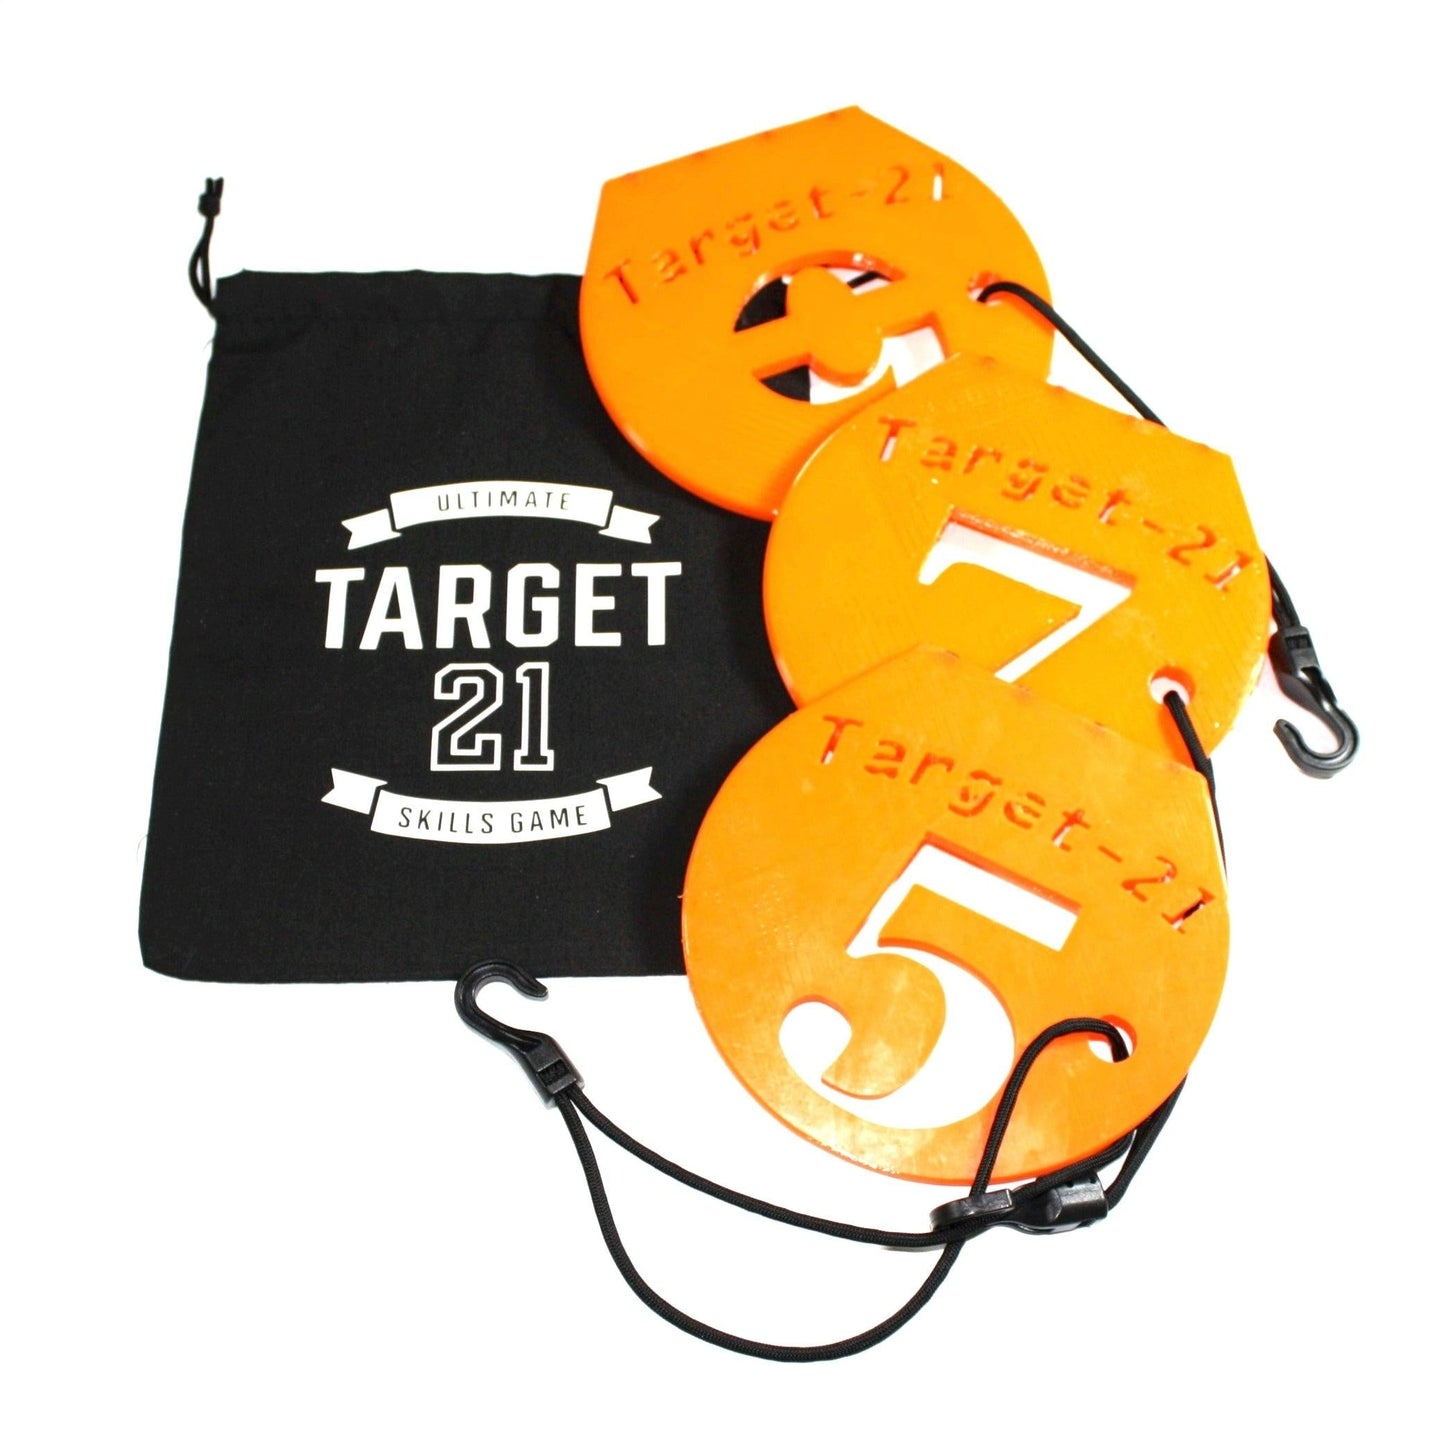 Target-21 Ultimate Magnetic Hockey Shooting Targets Skills Game Training Aid! - 3DWorxs